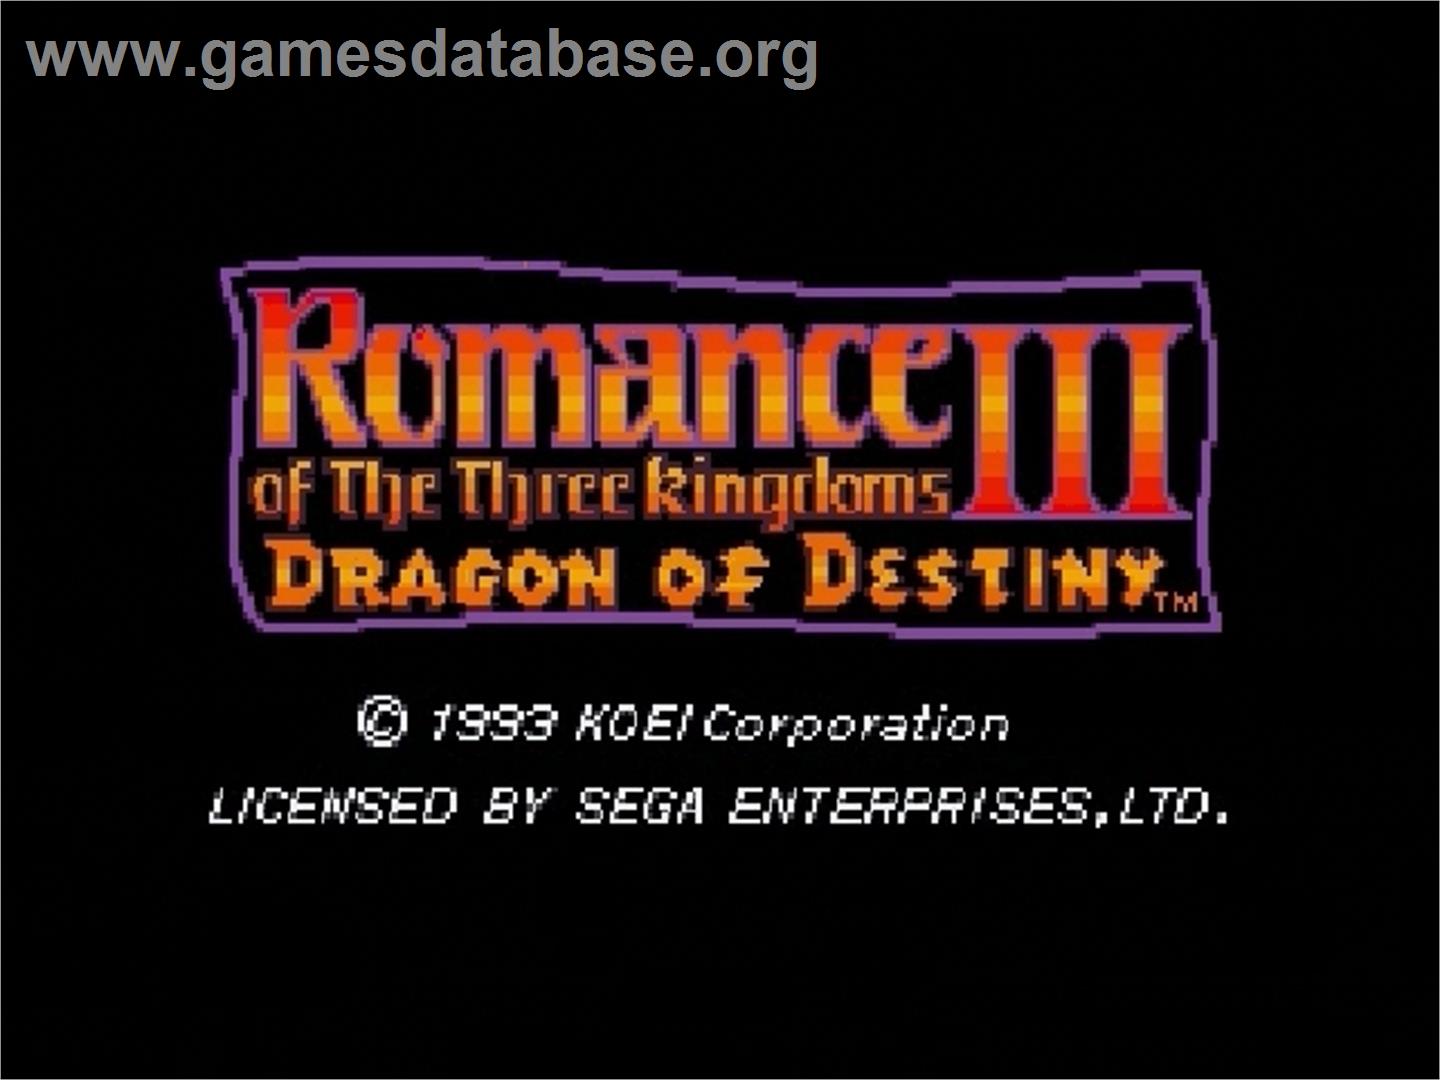 Romance of the Three Kingdoms III: Dragon of Destiny - Sega Genesis - Artwork - Title Screen